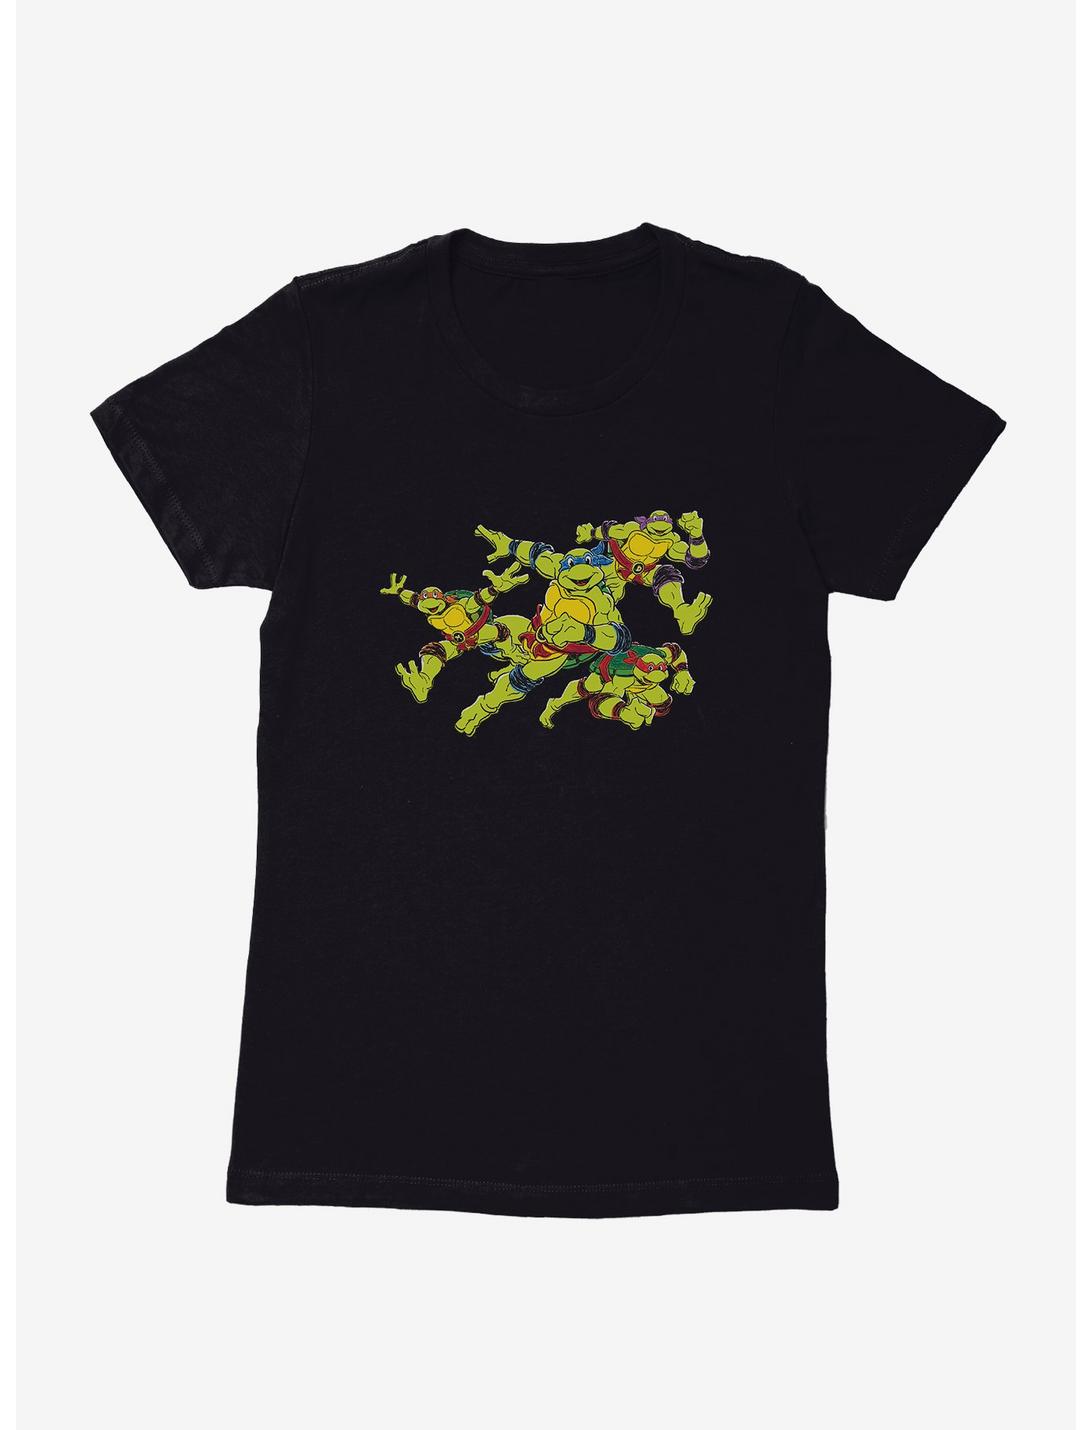 Teenage Mutant Ninja Turtles Group Action Poses Womens T-Shirt, , hi-res